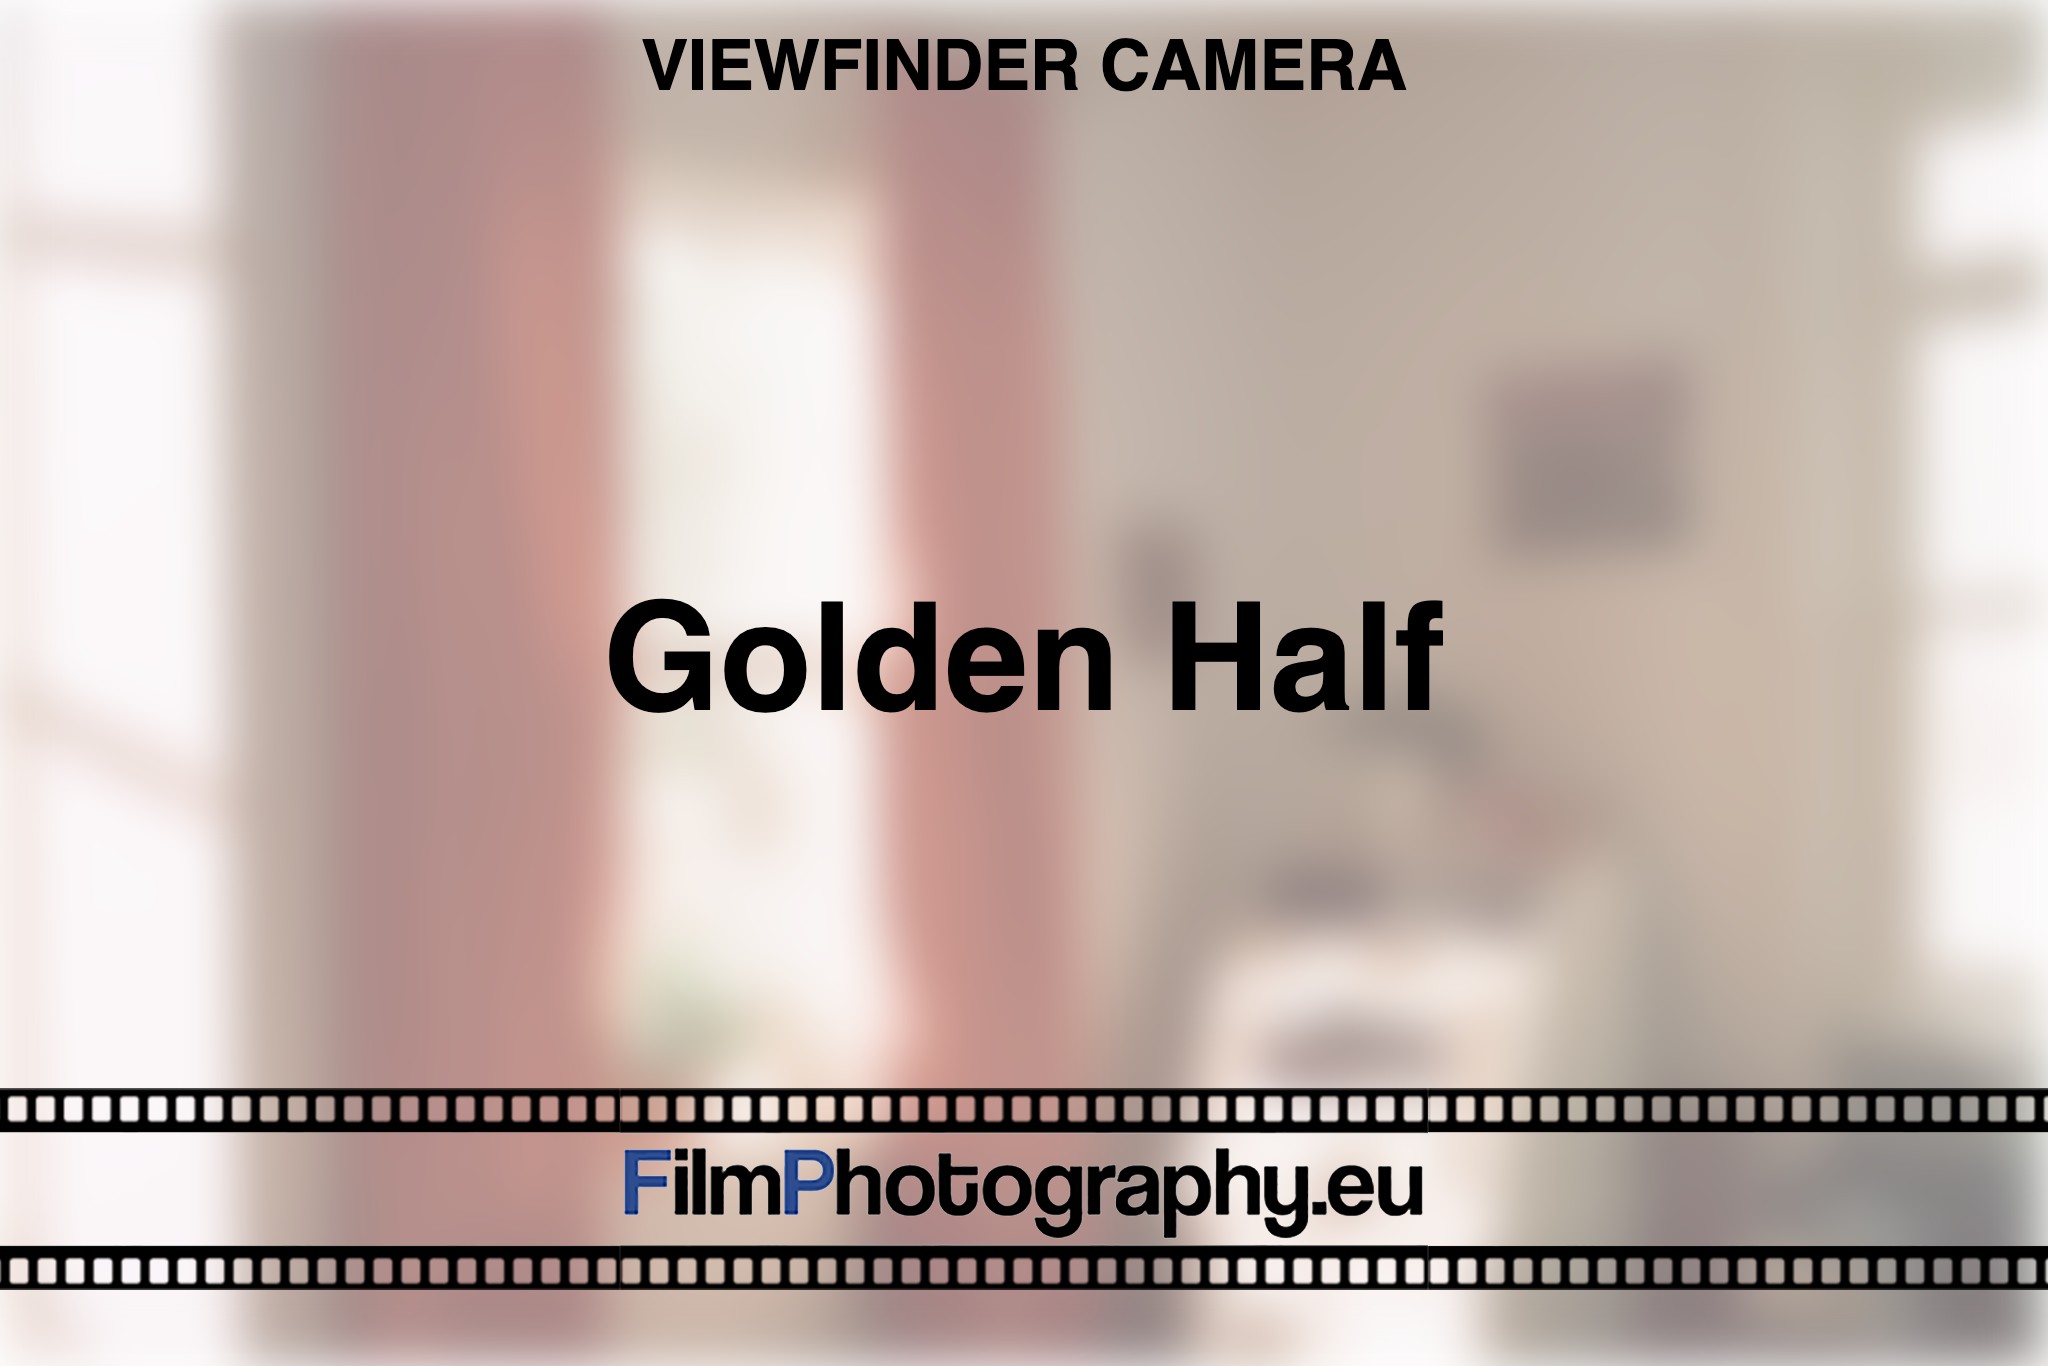 golden-half-viewfinder-camera-bnv